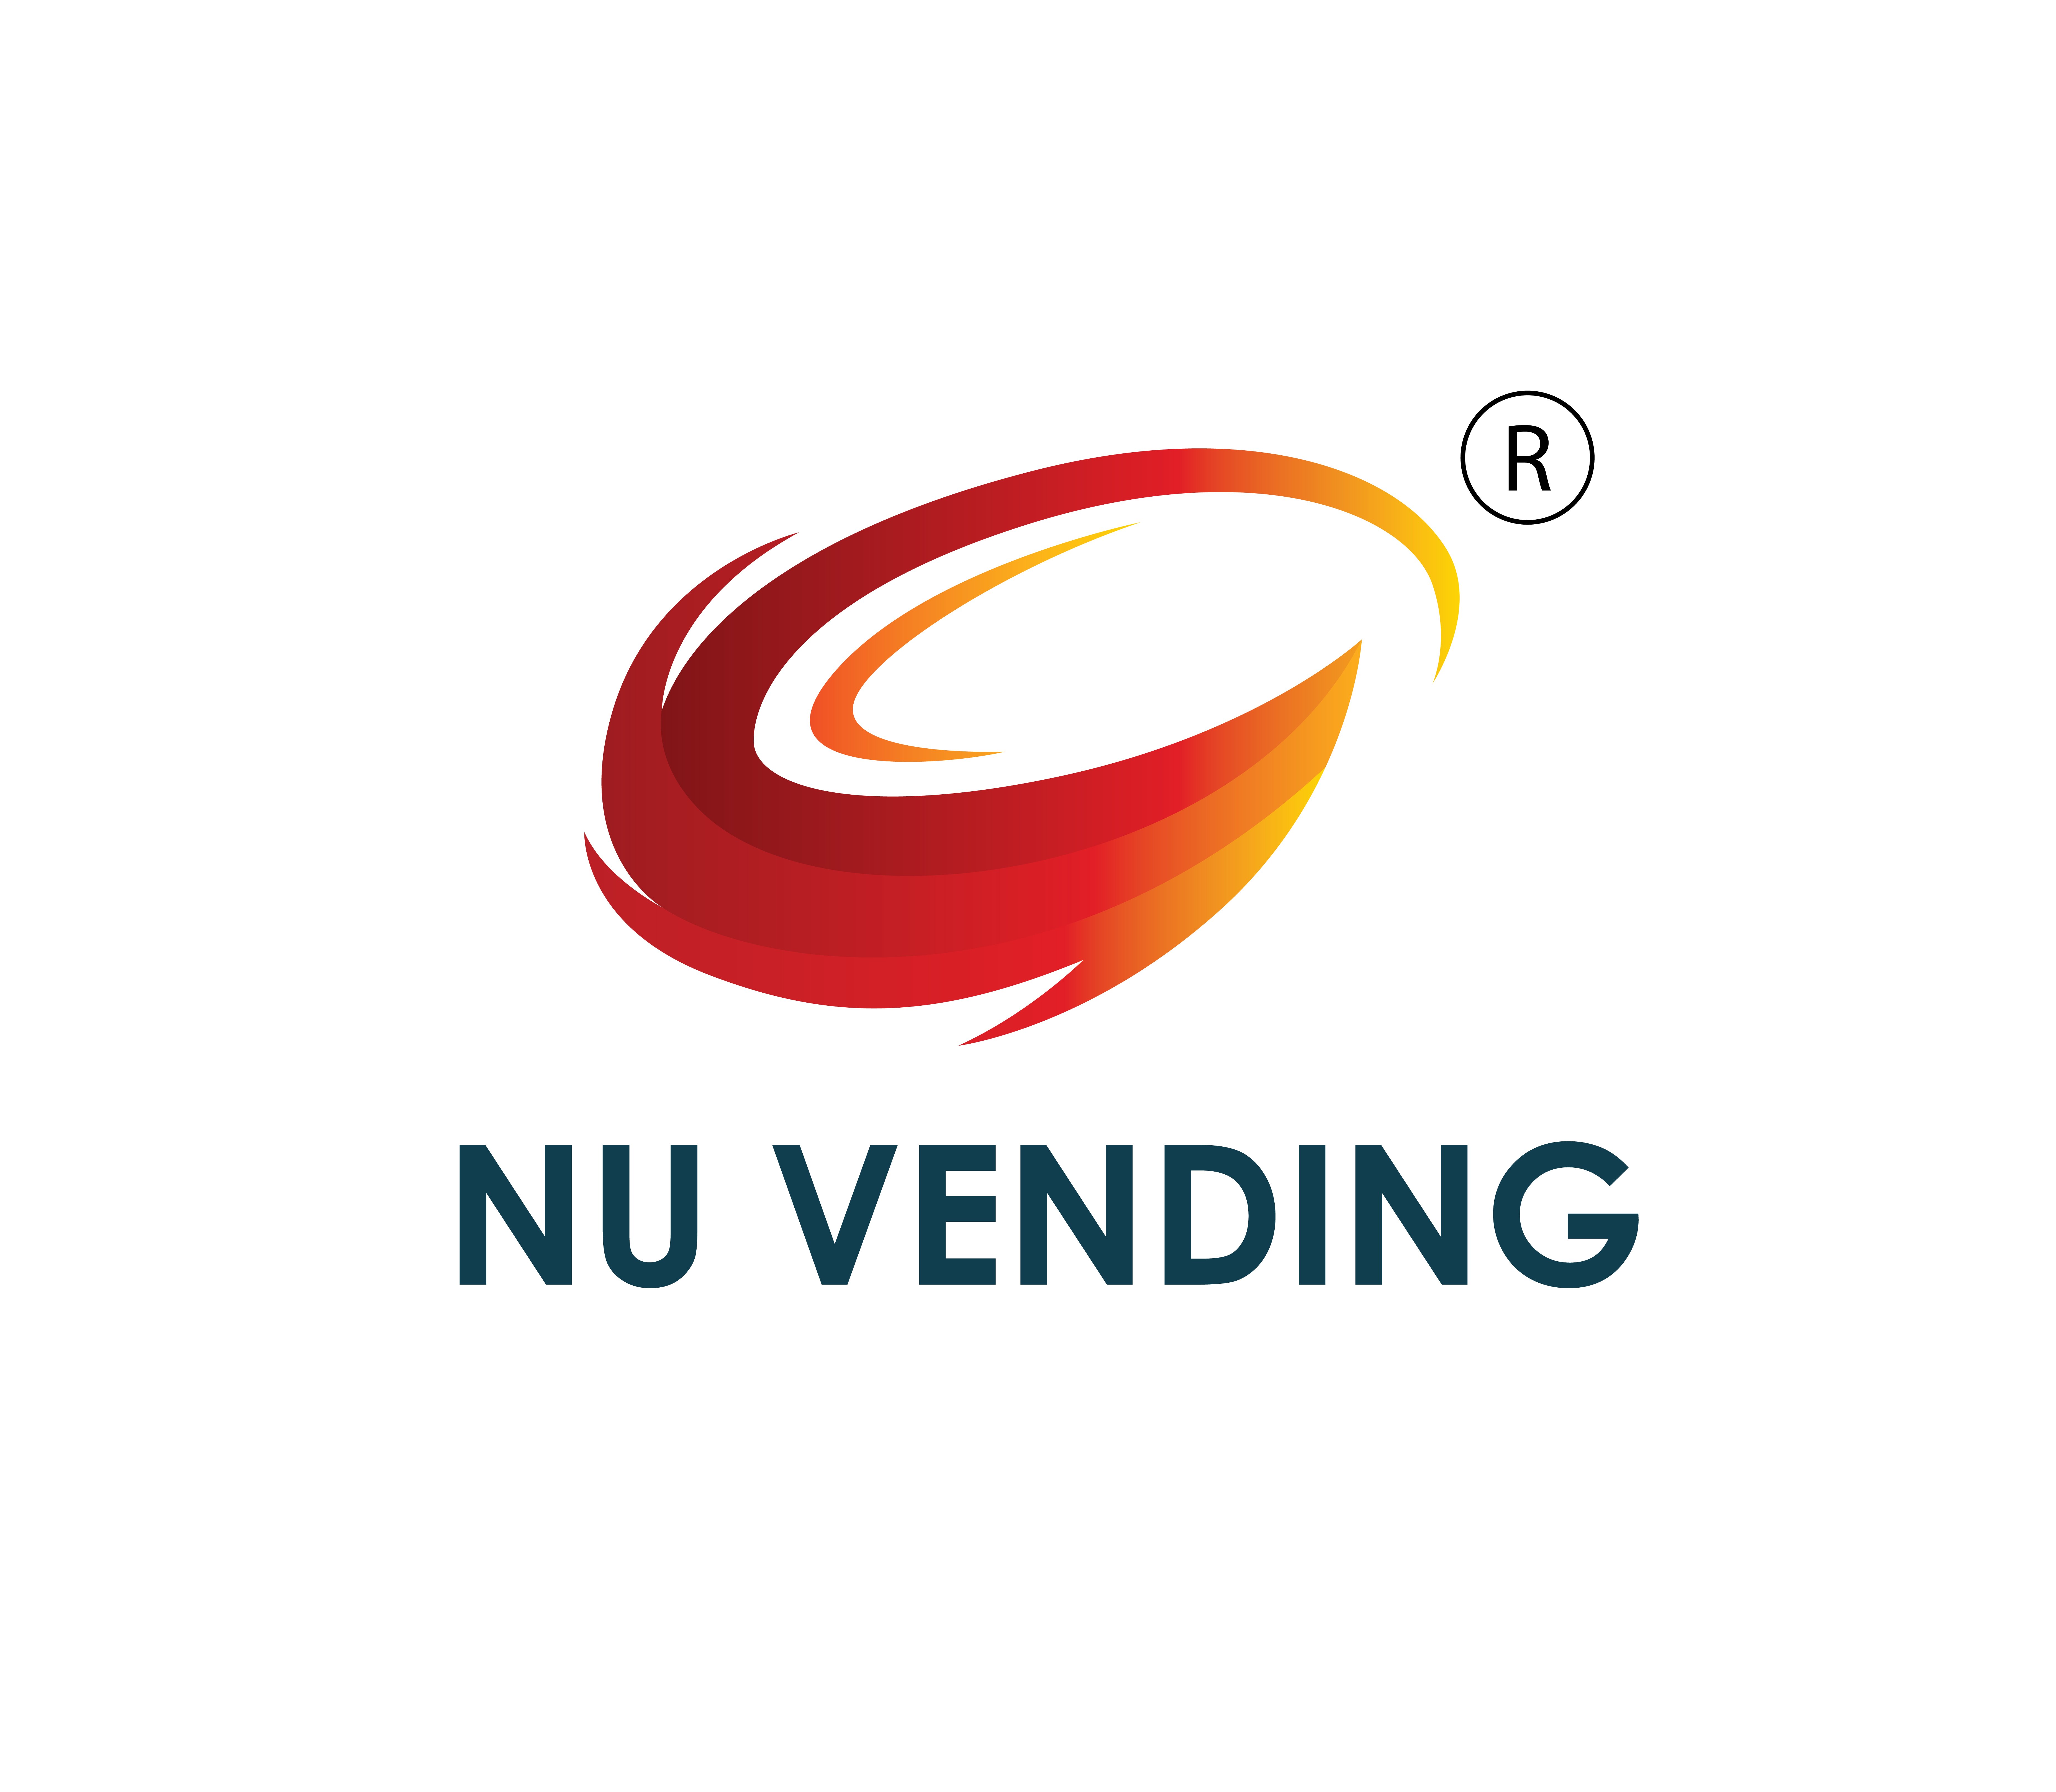 NU VENDING logo